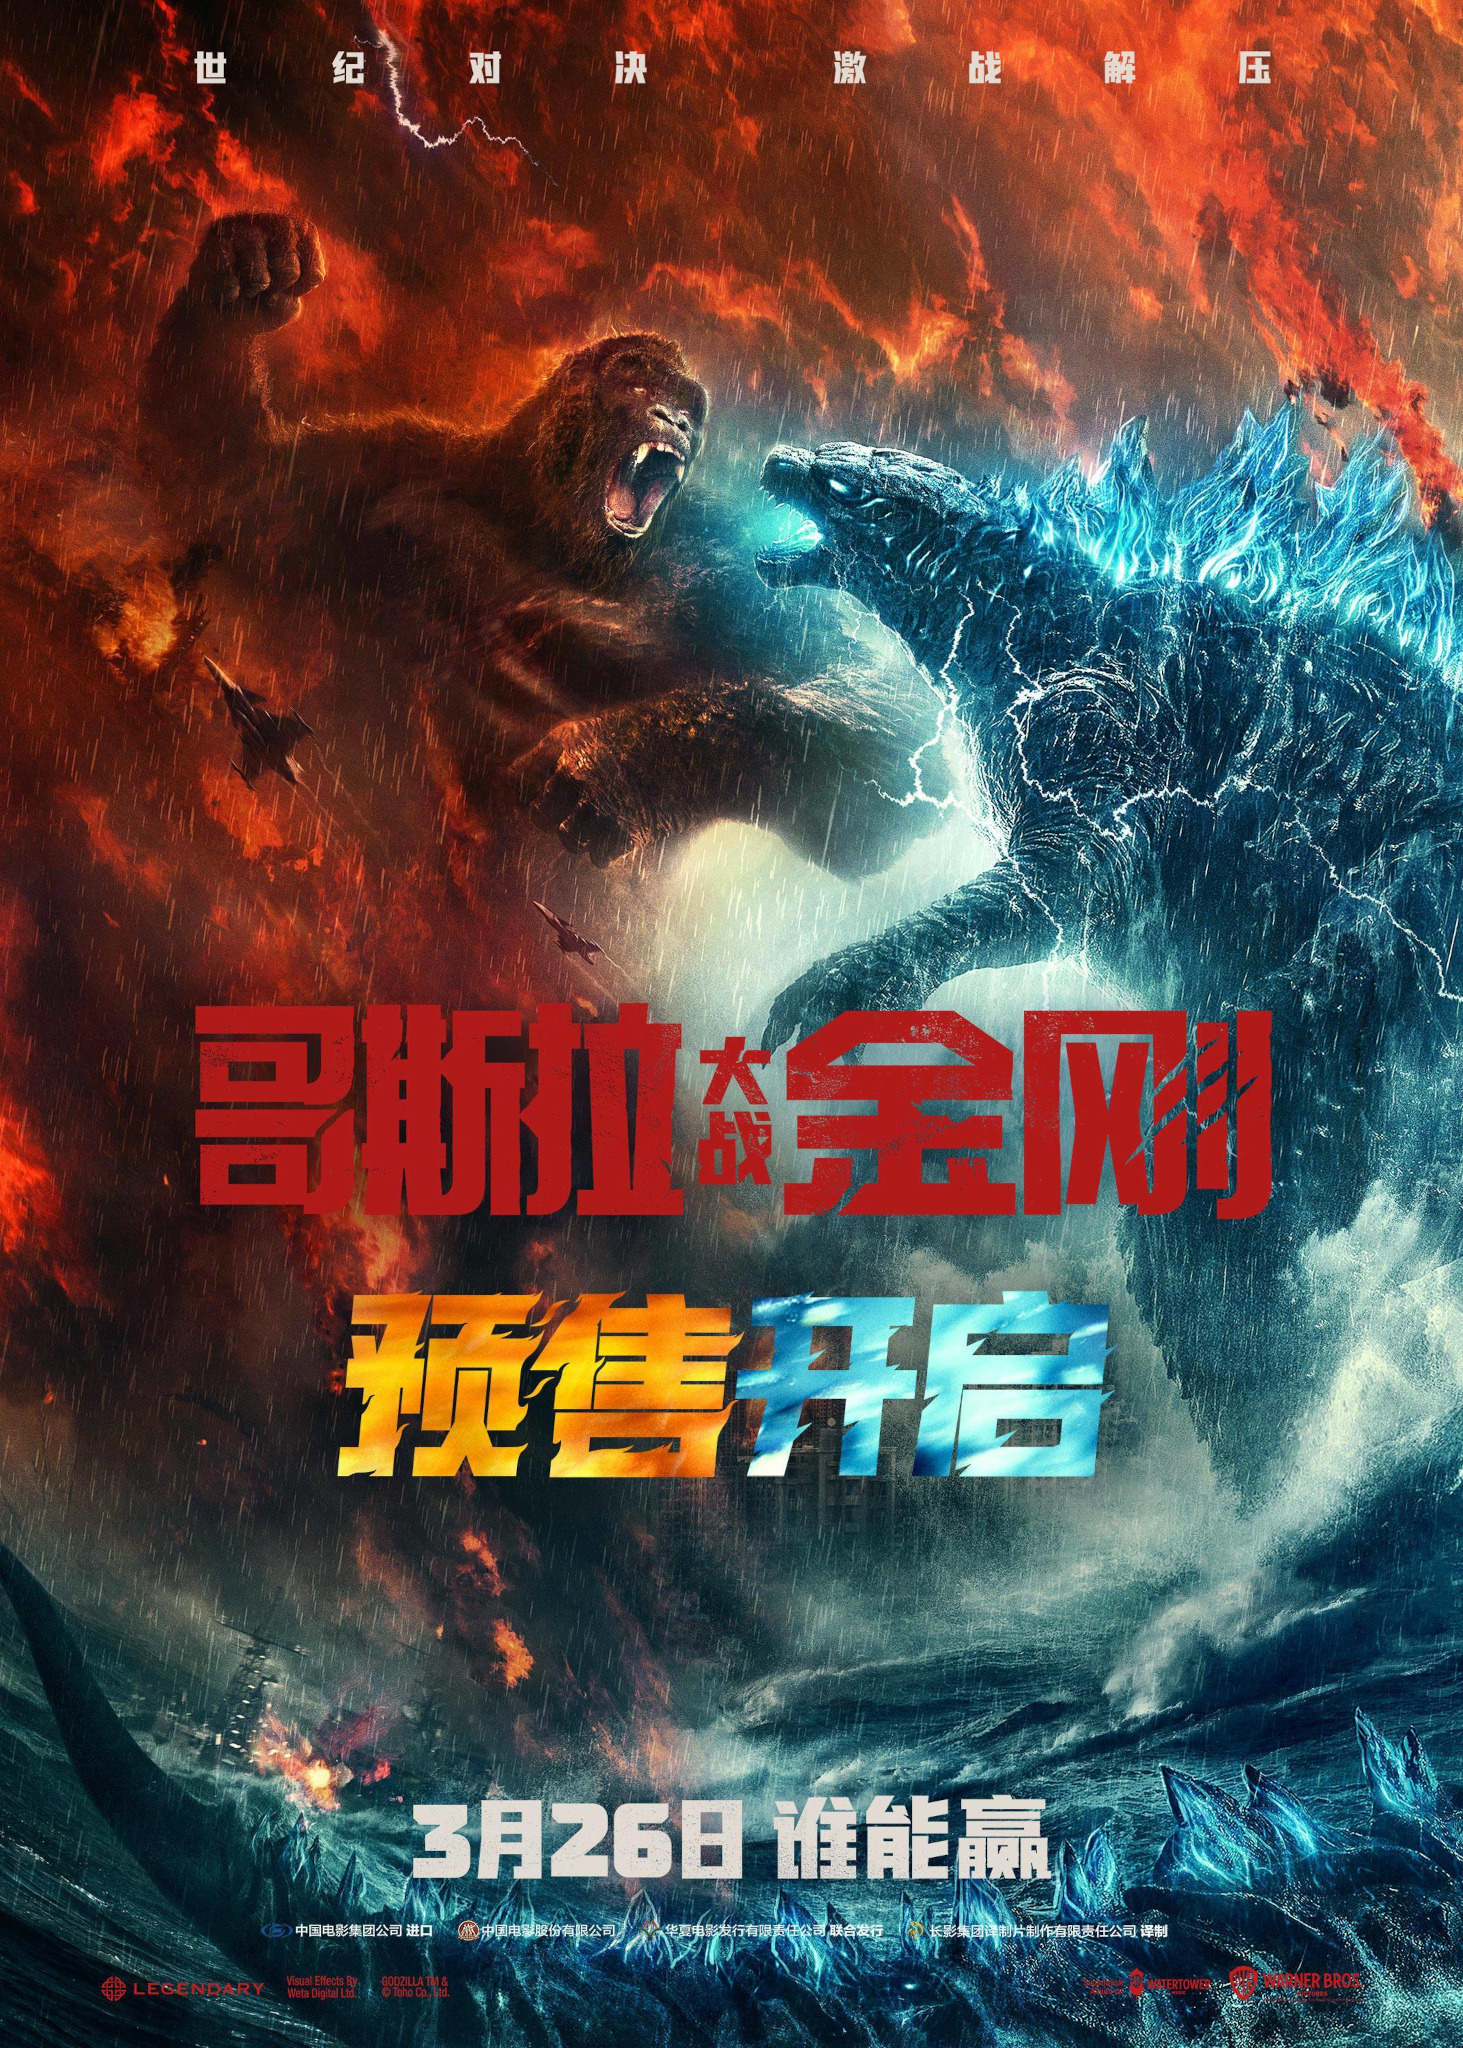 Mega Sized Movie Poster Image for Godzilla vs. Kong (#17 of 20)